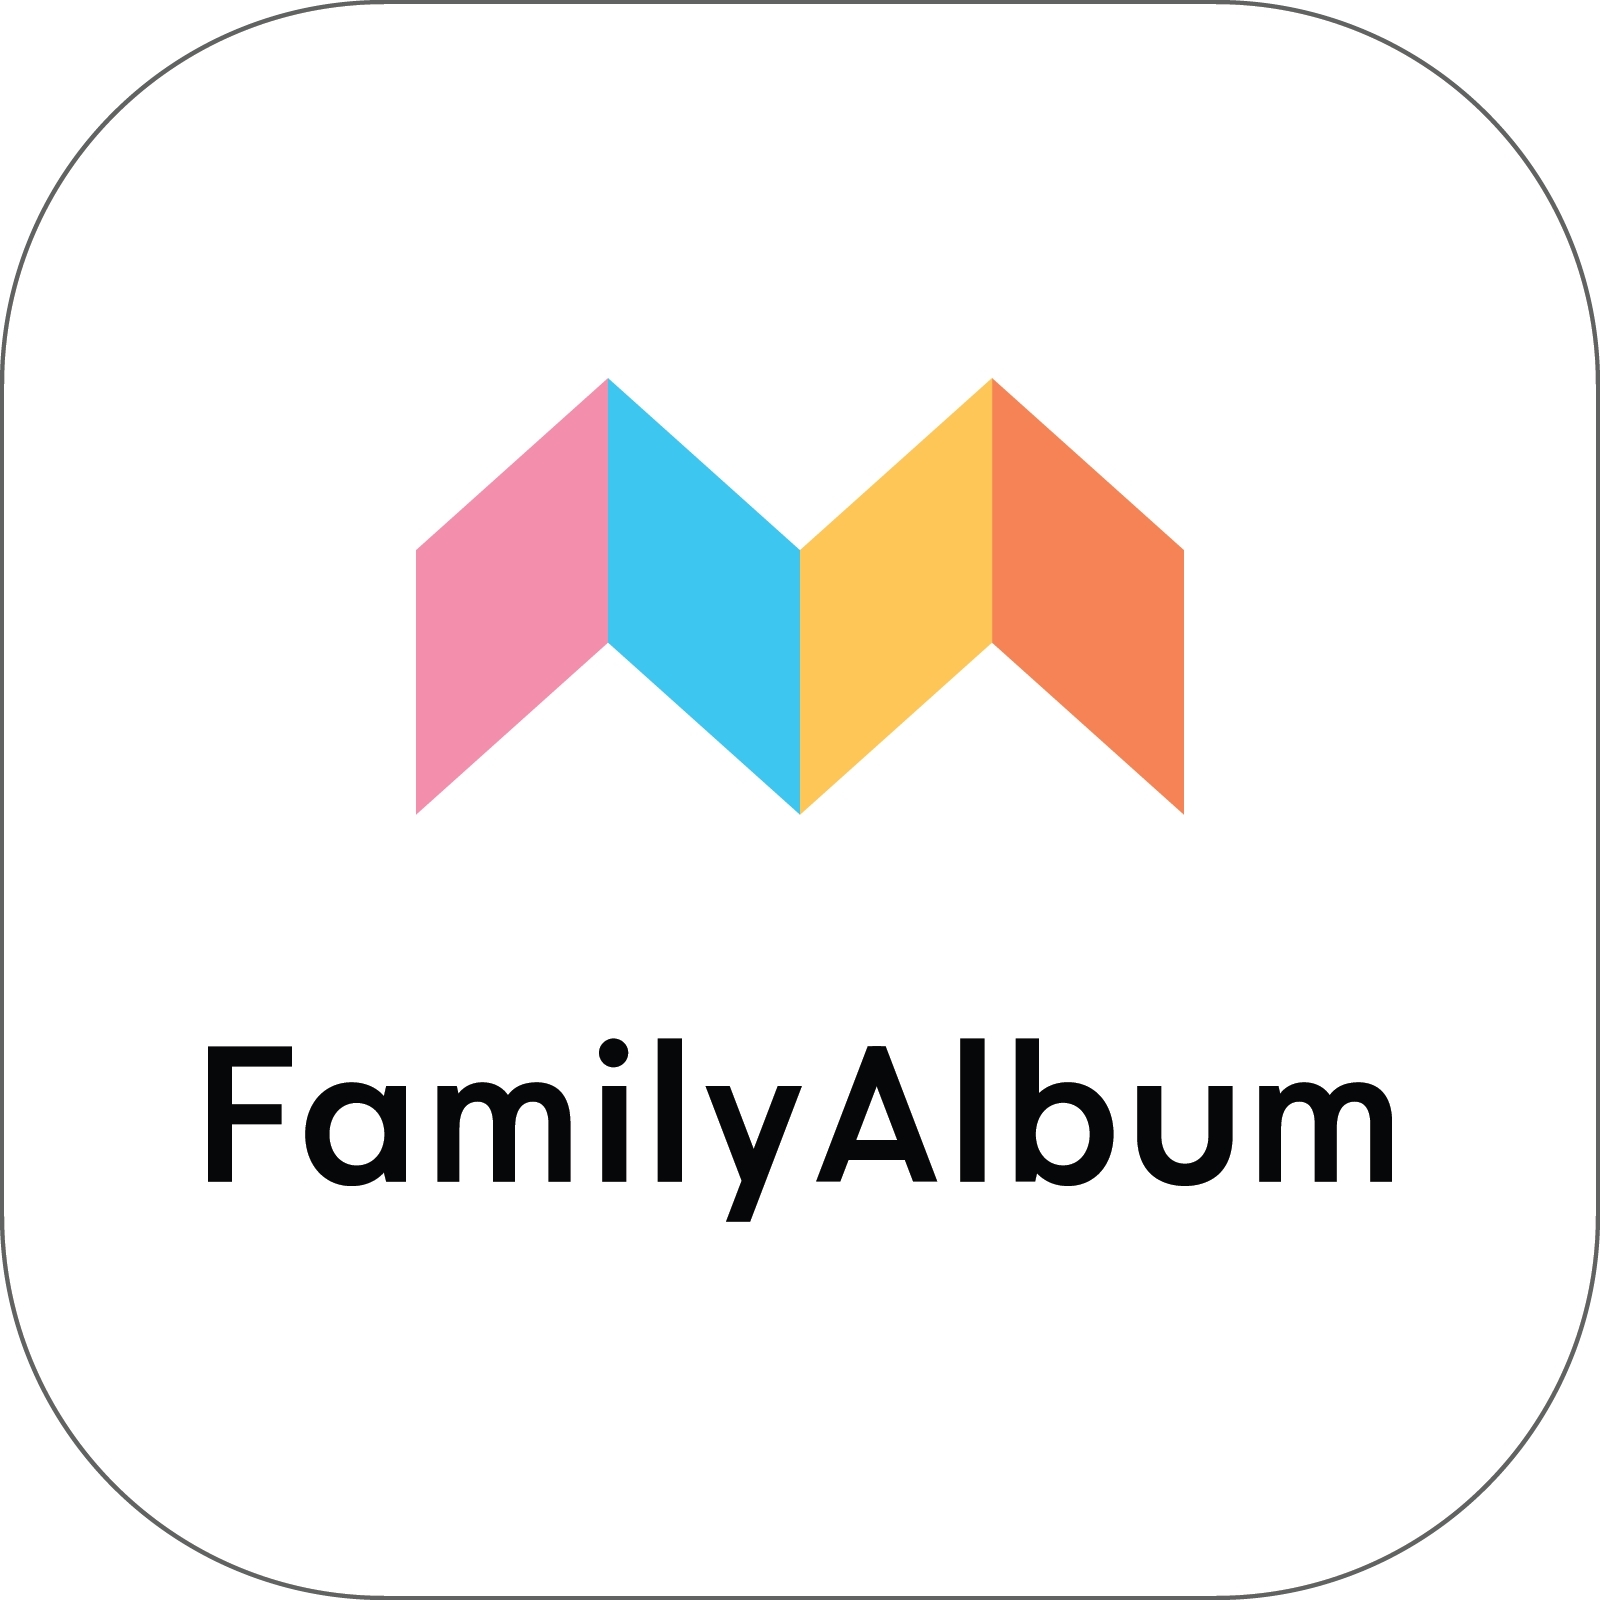 Photo and Video Sharing App FamilyAlbum Named 2019 NAPPA Award Winner | Business Wire